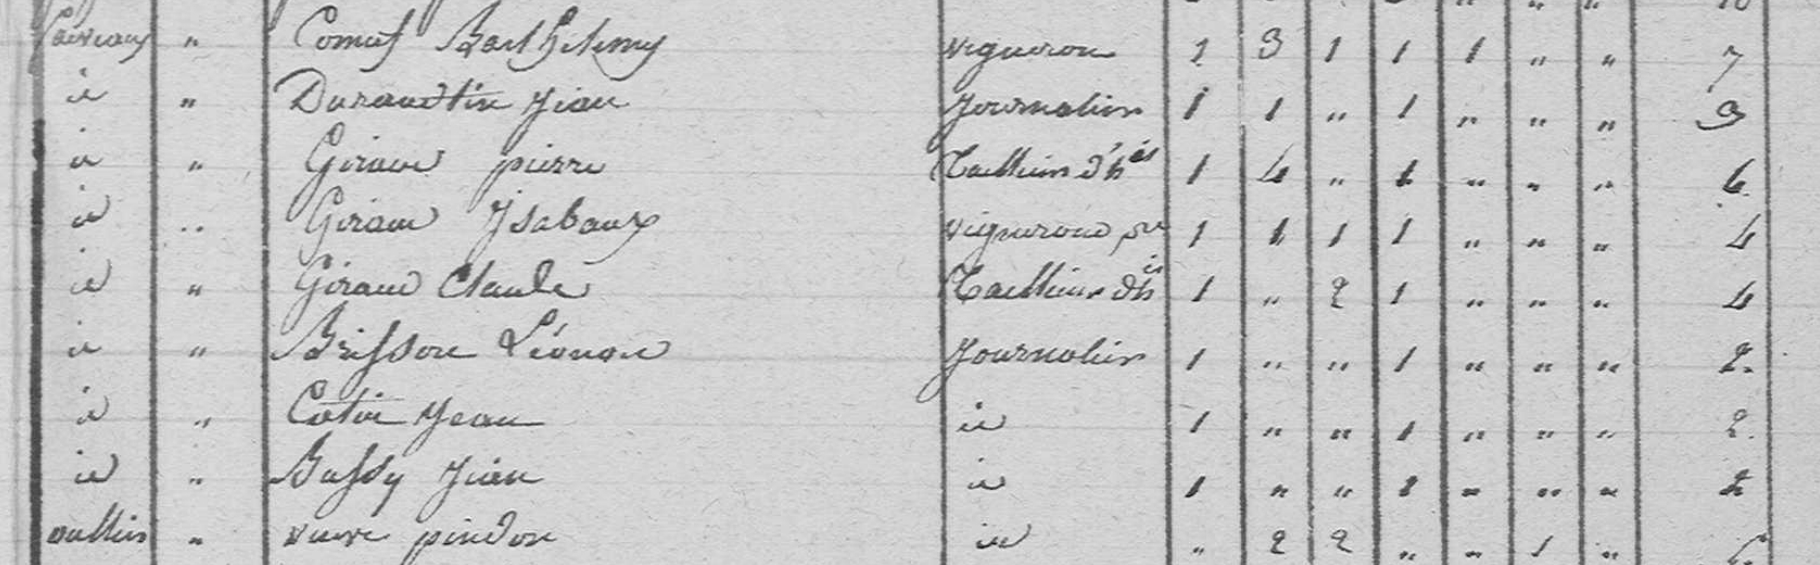 extrait recensement 1820 Cossaye